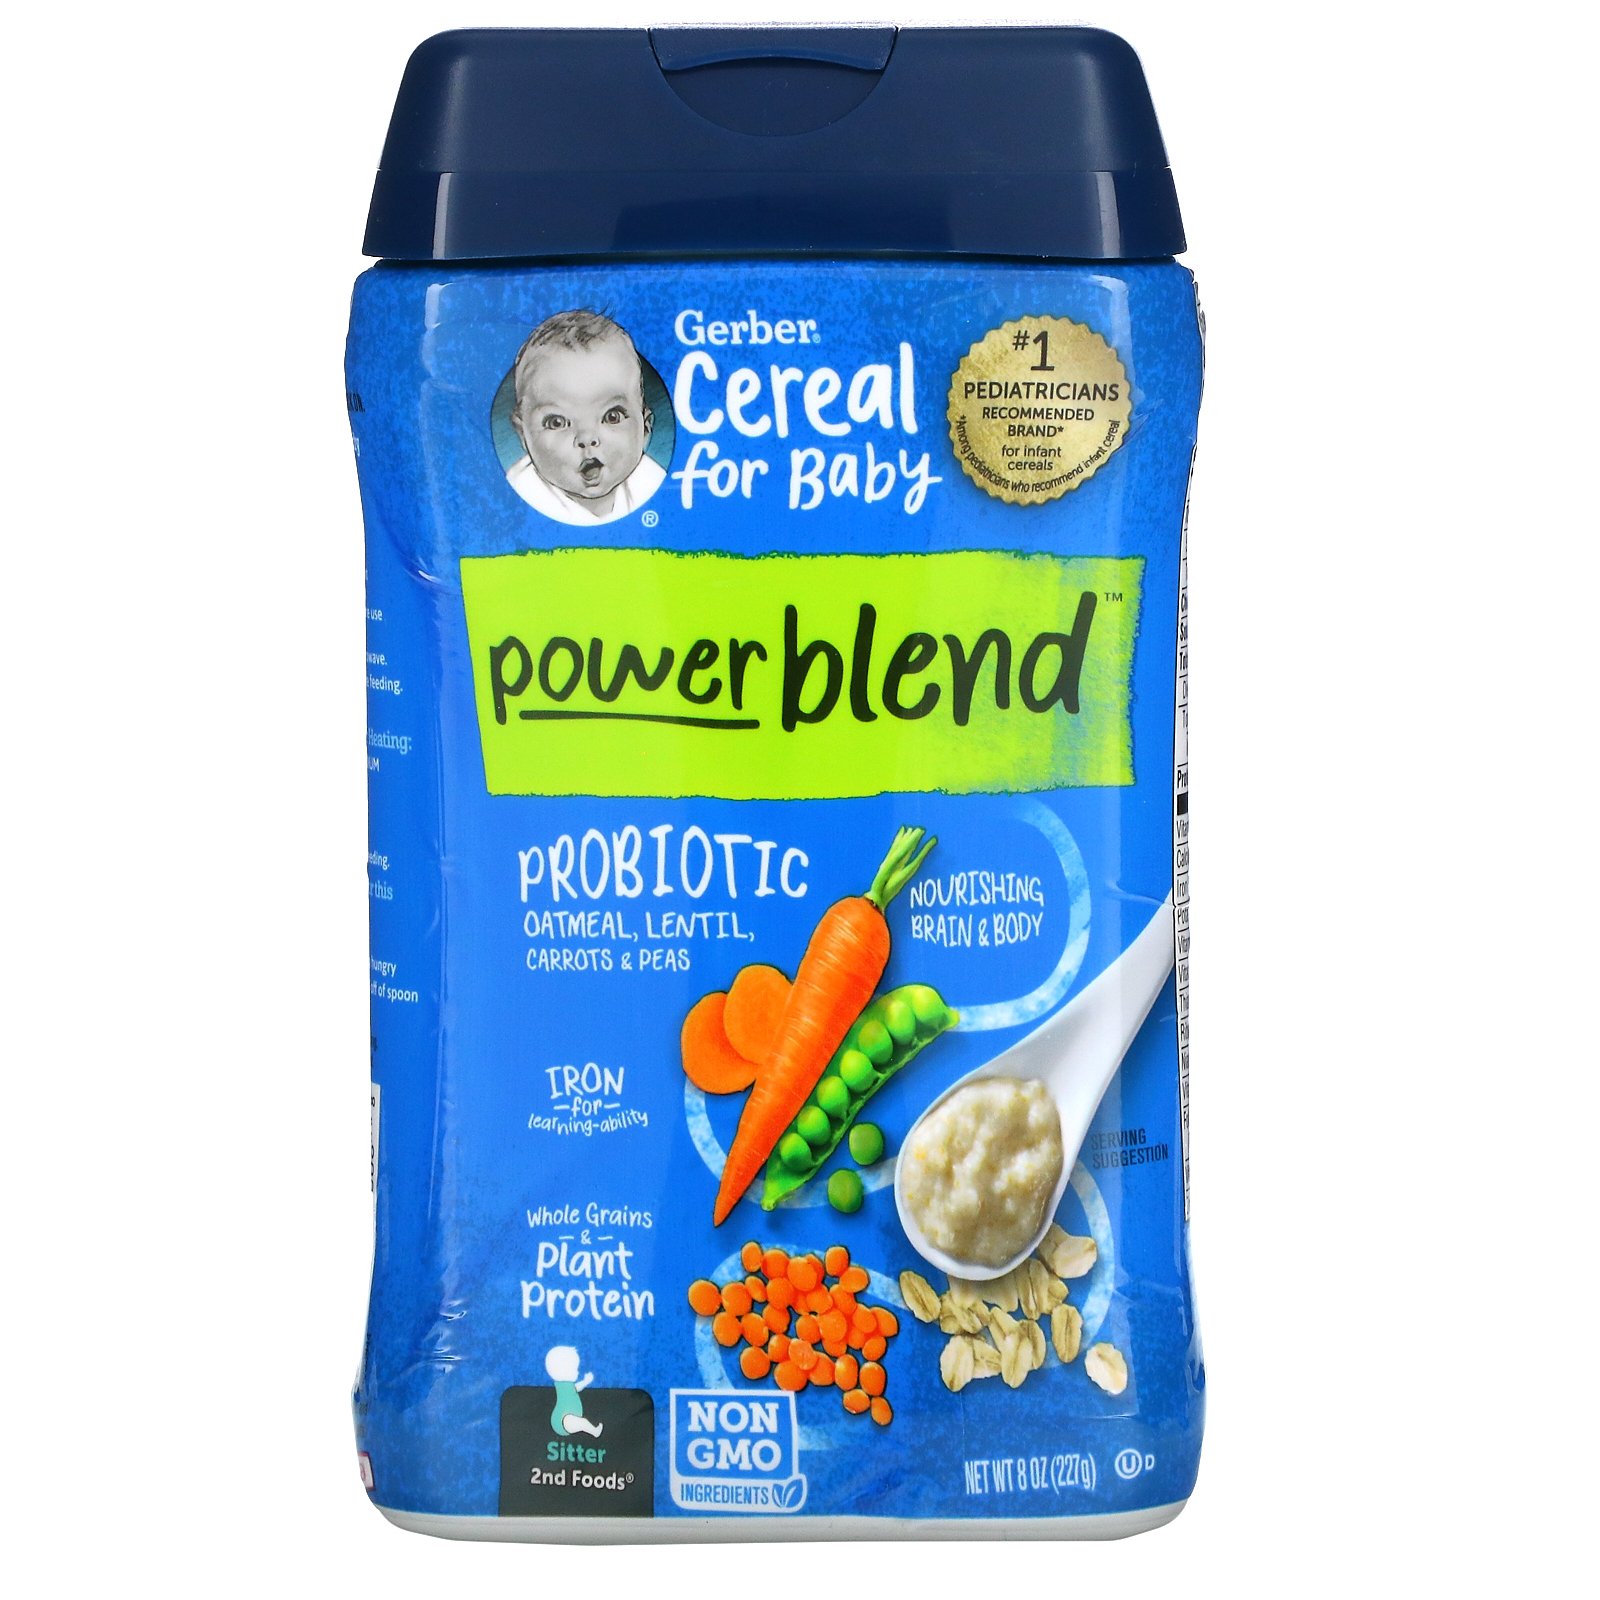 Gerber, Powerblend Cereal for Baby, Probiotic Oatmeal, Lentil, Carrots